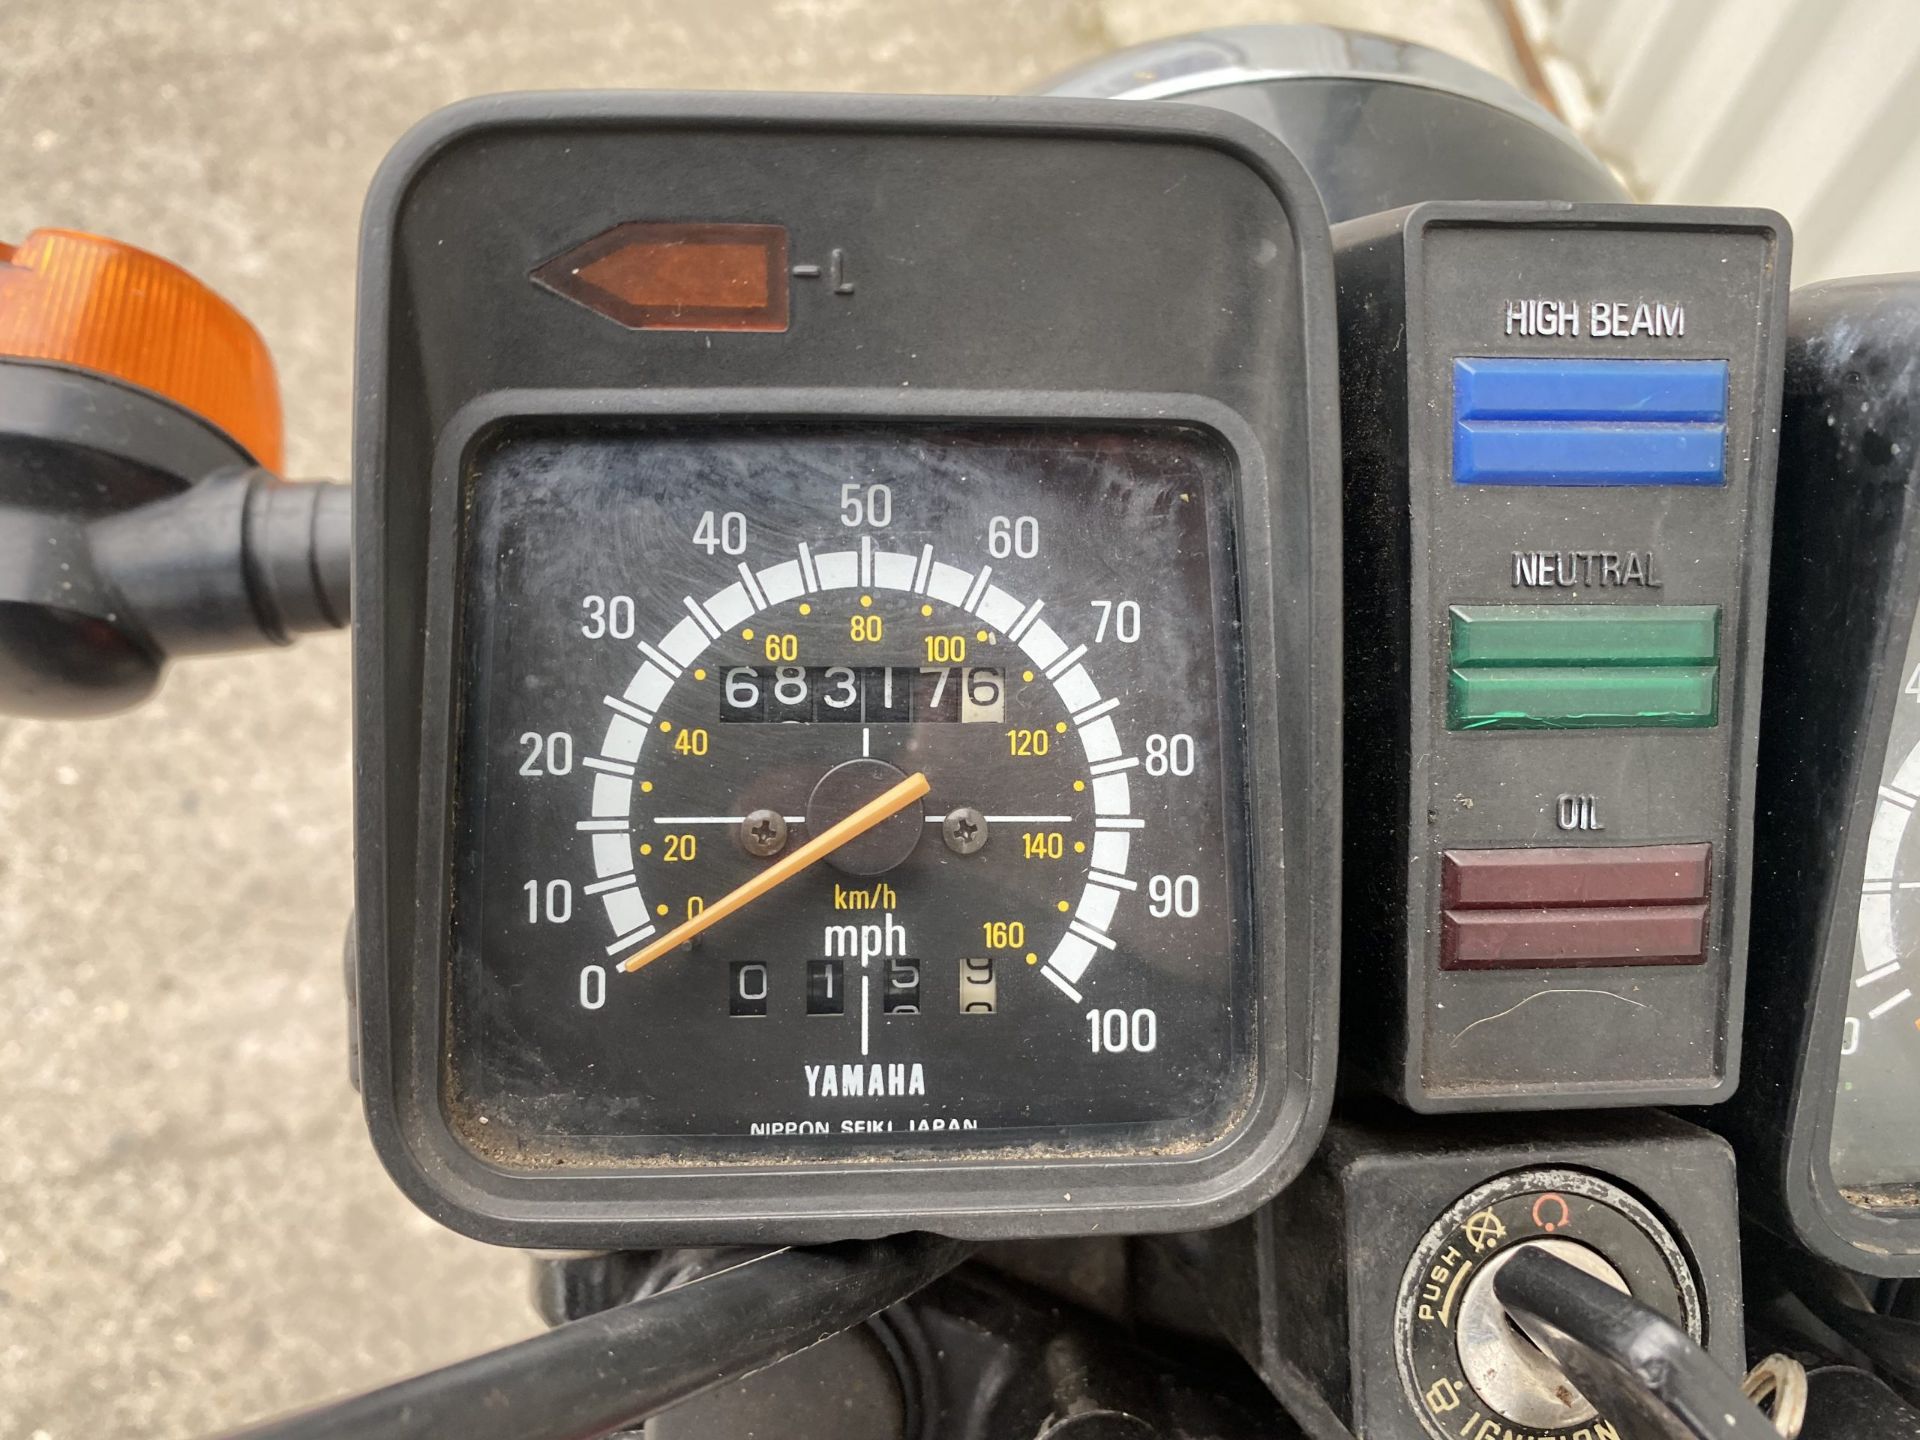 Yamaha RXS100 Motorcycle - Image 2 of 18